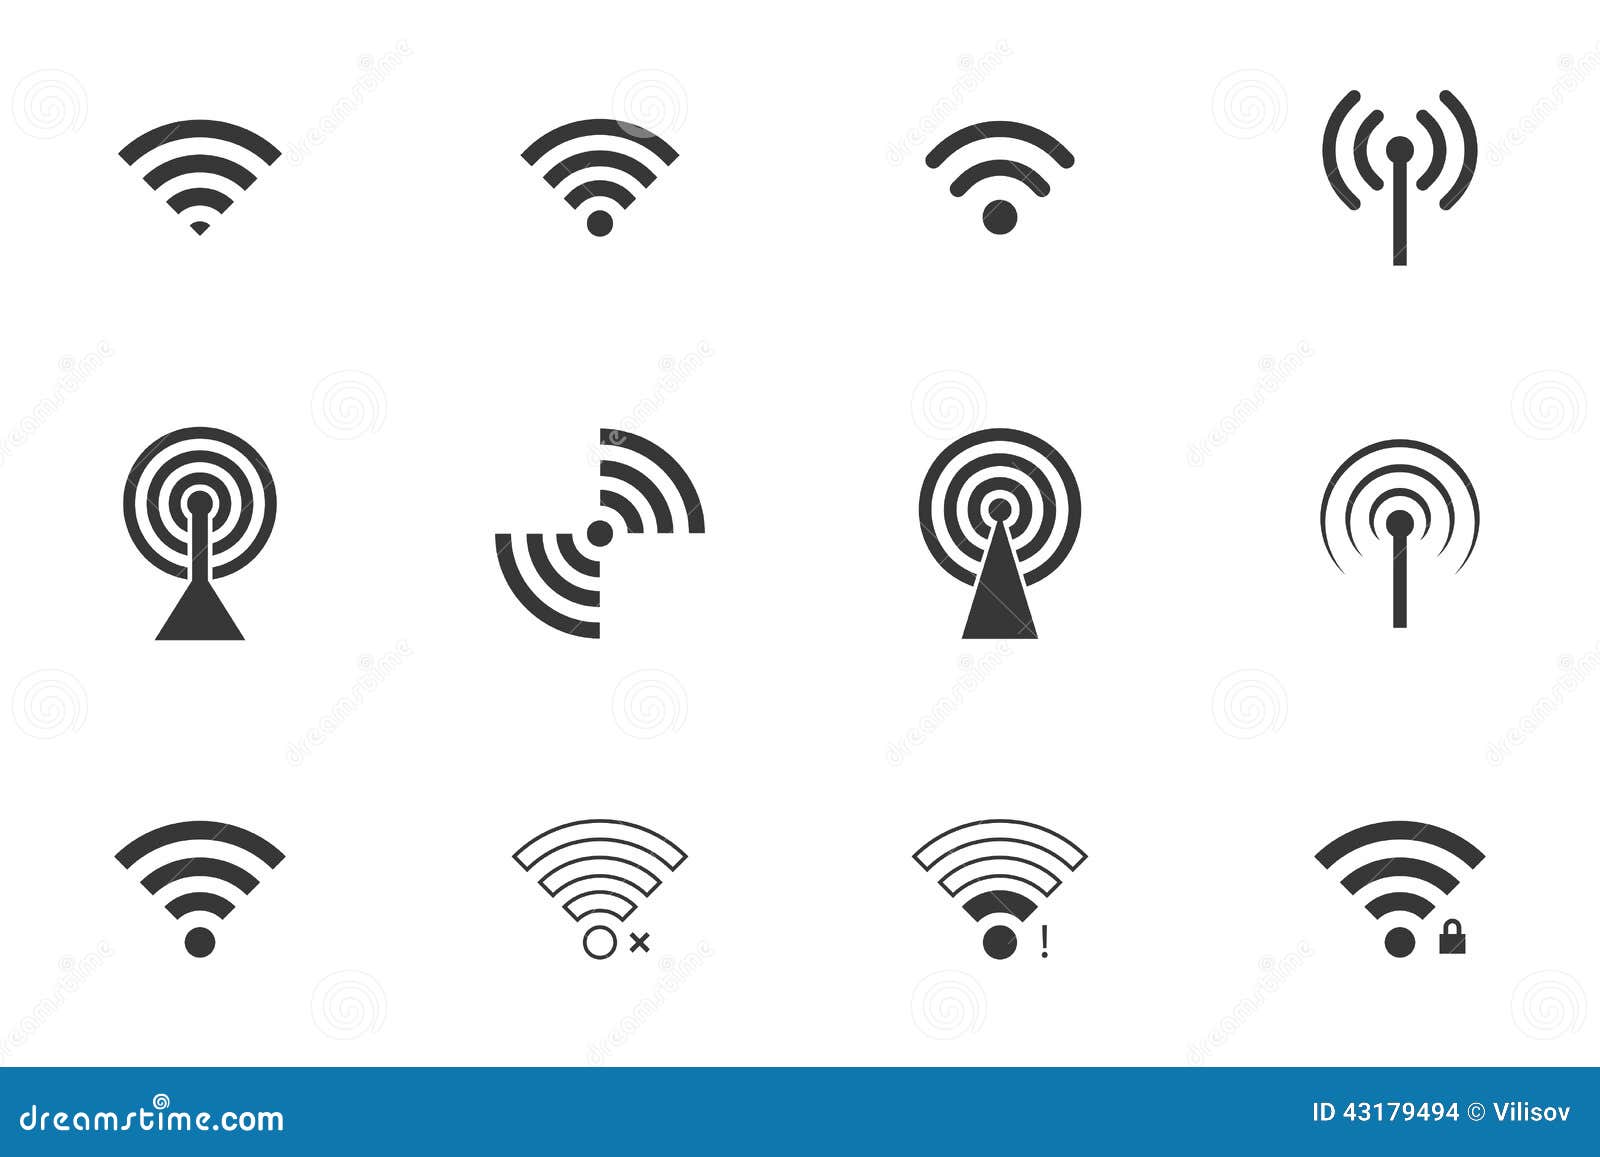 wifi icons